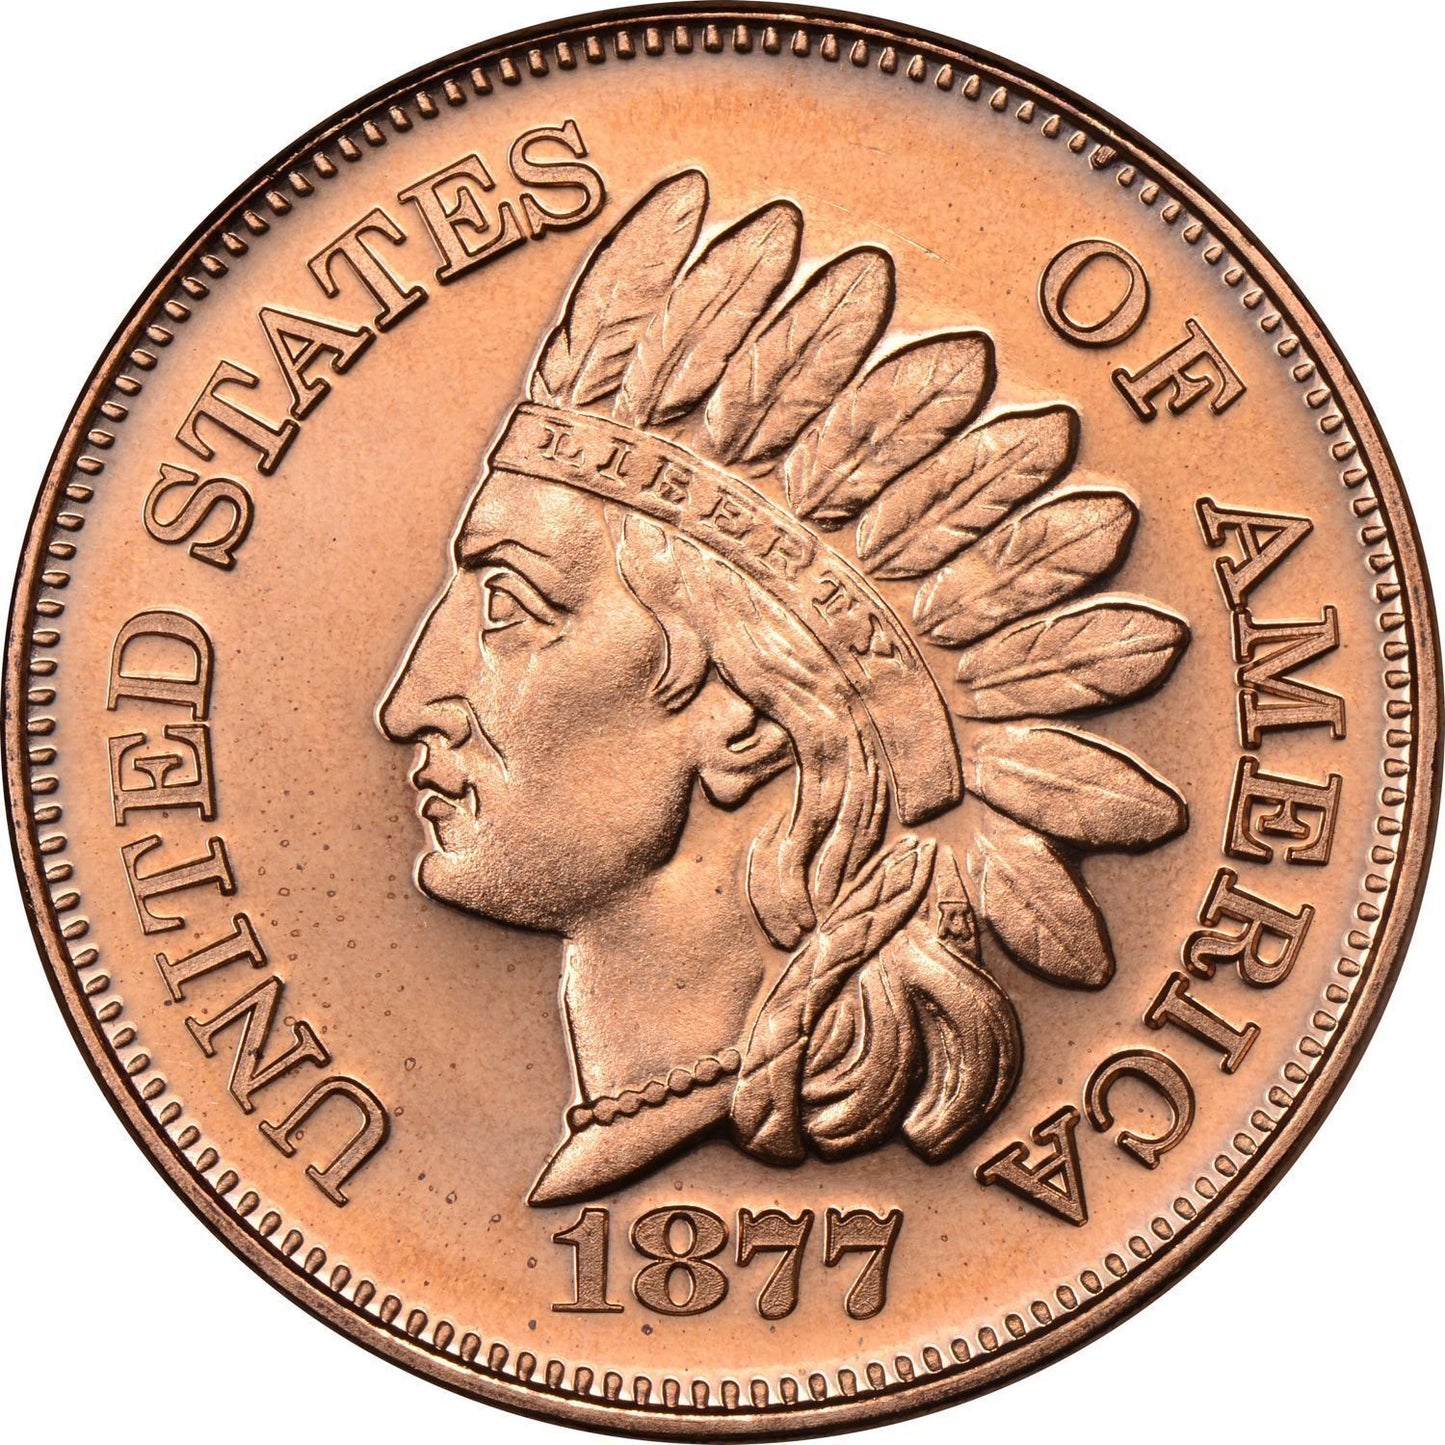 Three 1 Oz. Copper Bullion Coins Wooden Box